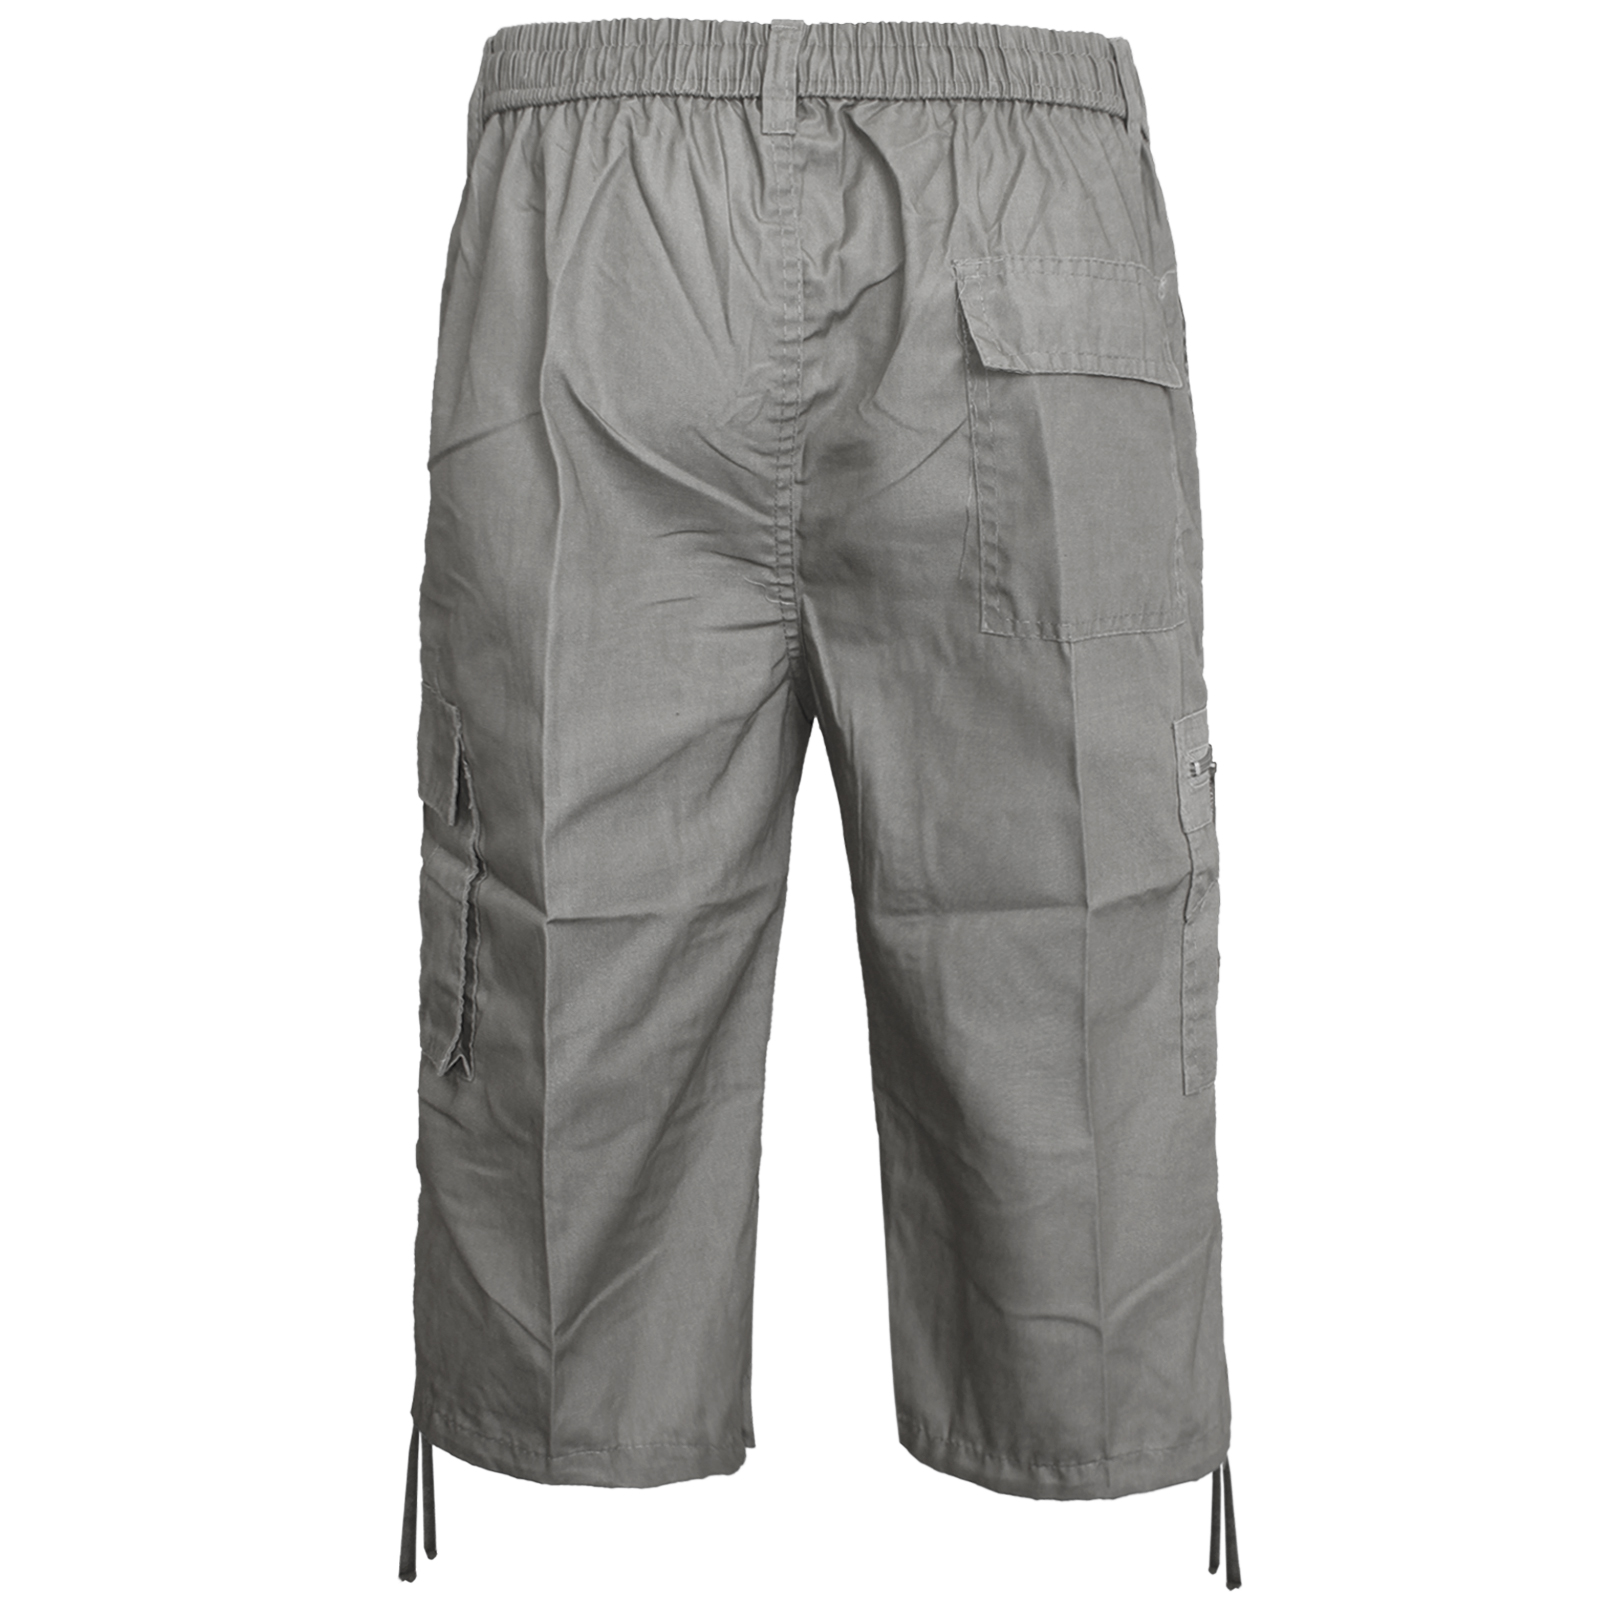 New Mens 3//4 Long Elasticated Shorts Cargo Combat Multi Pocket Summer Gym Pants